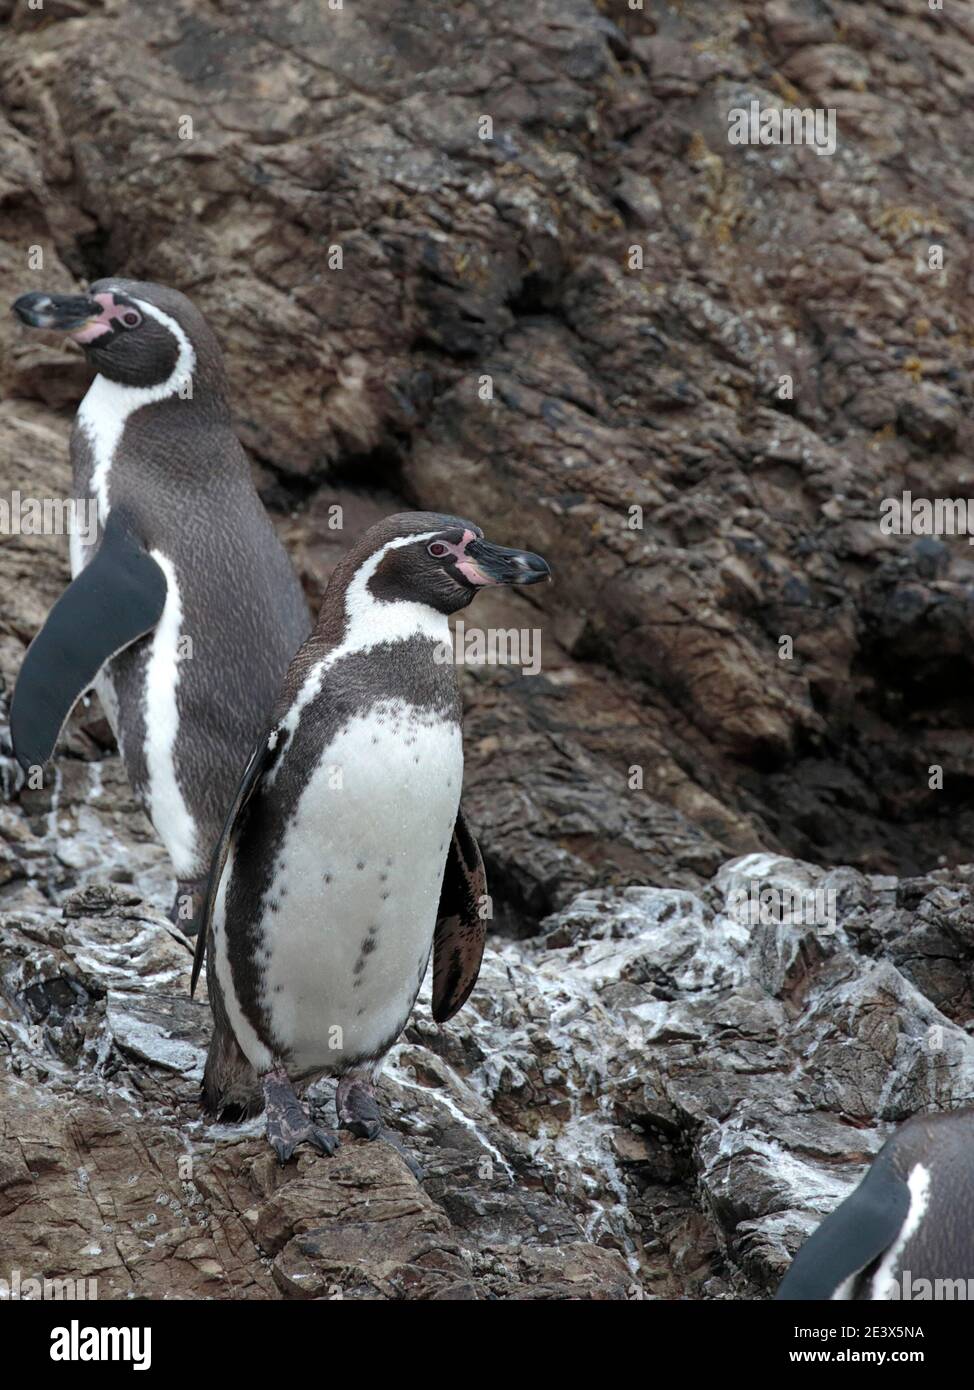 Humboldt Penguin (Spheniscus humboldti), penguin colony at Bahia Punihuil, Chiloe Island, Los Lagos Region, south Chile 11th Jan 2016 Stock Photo